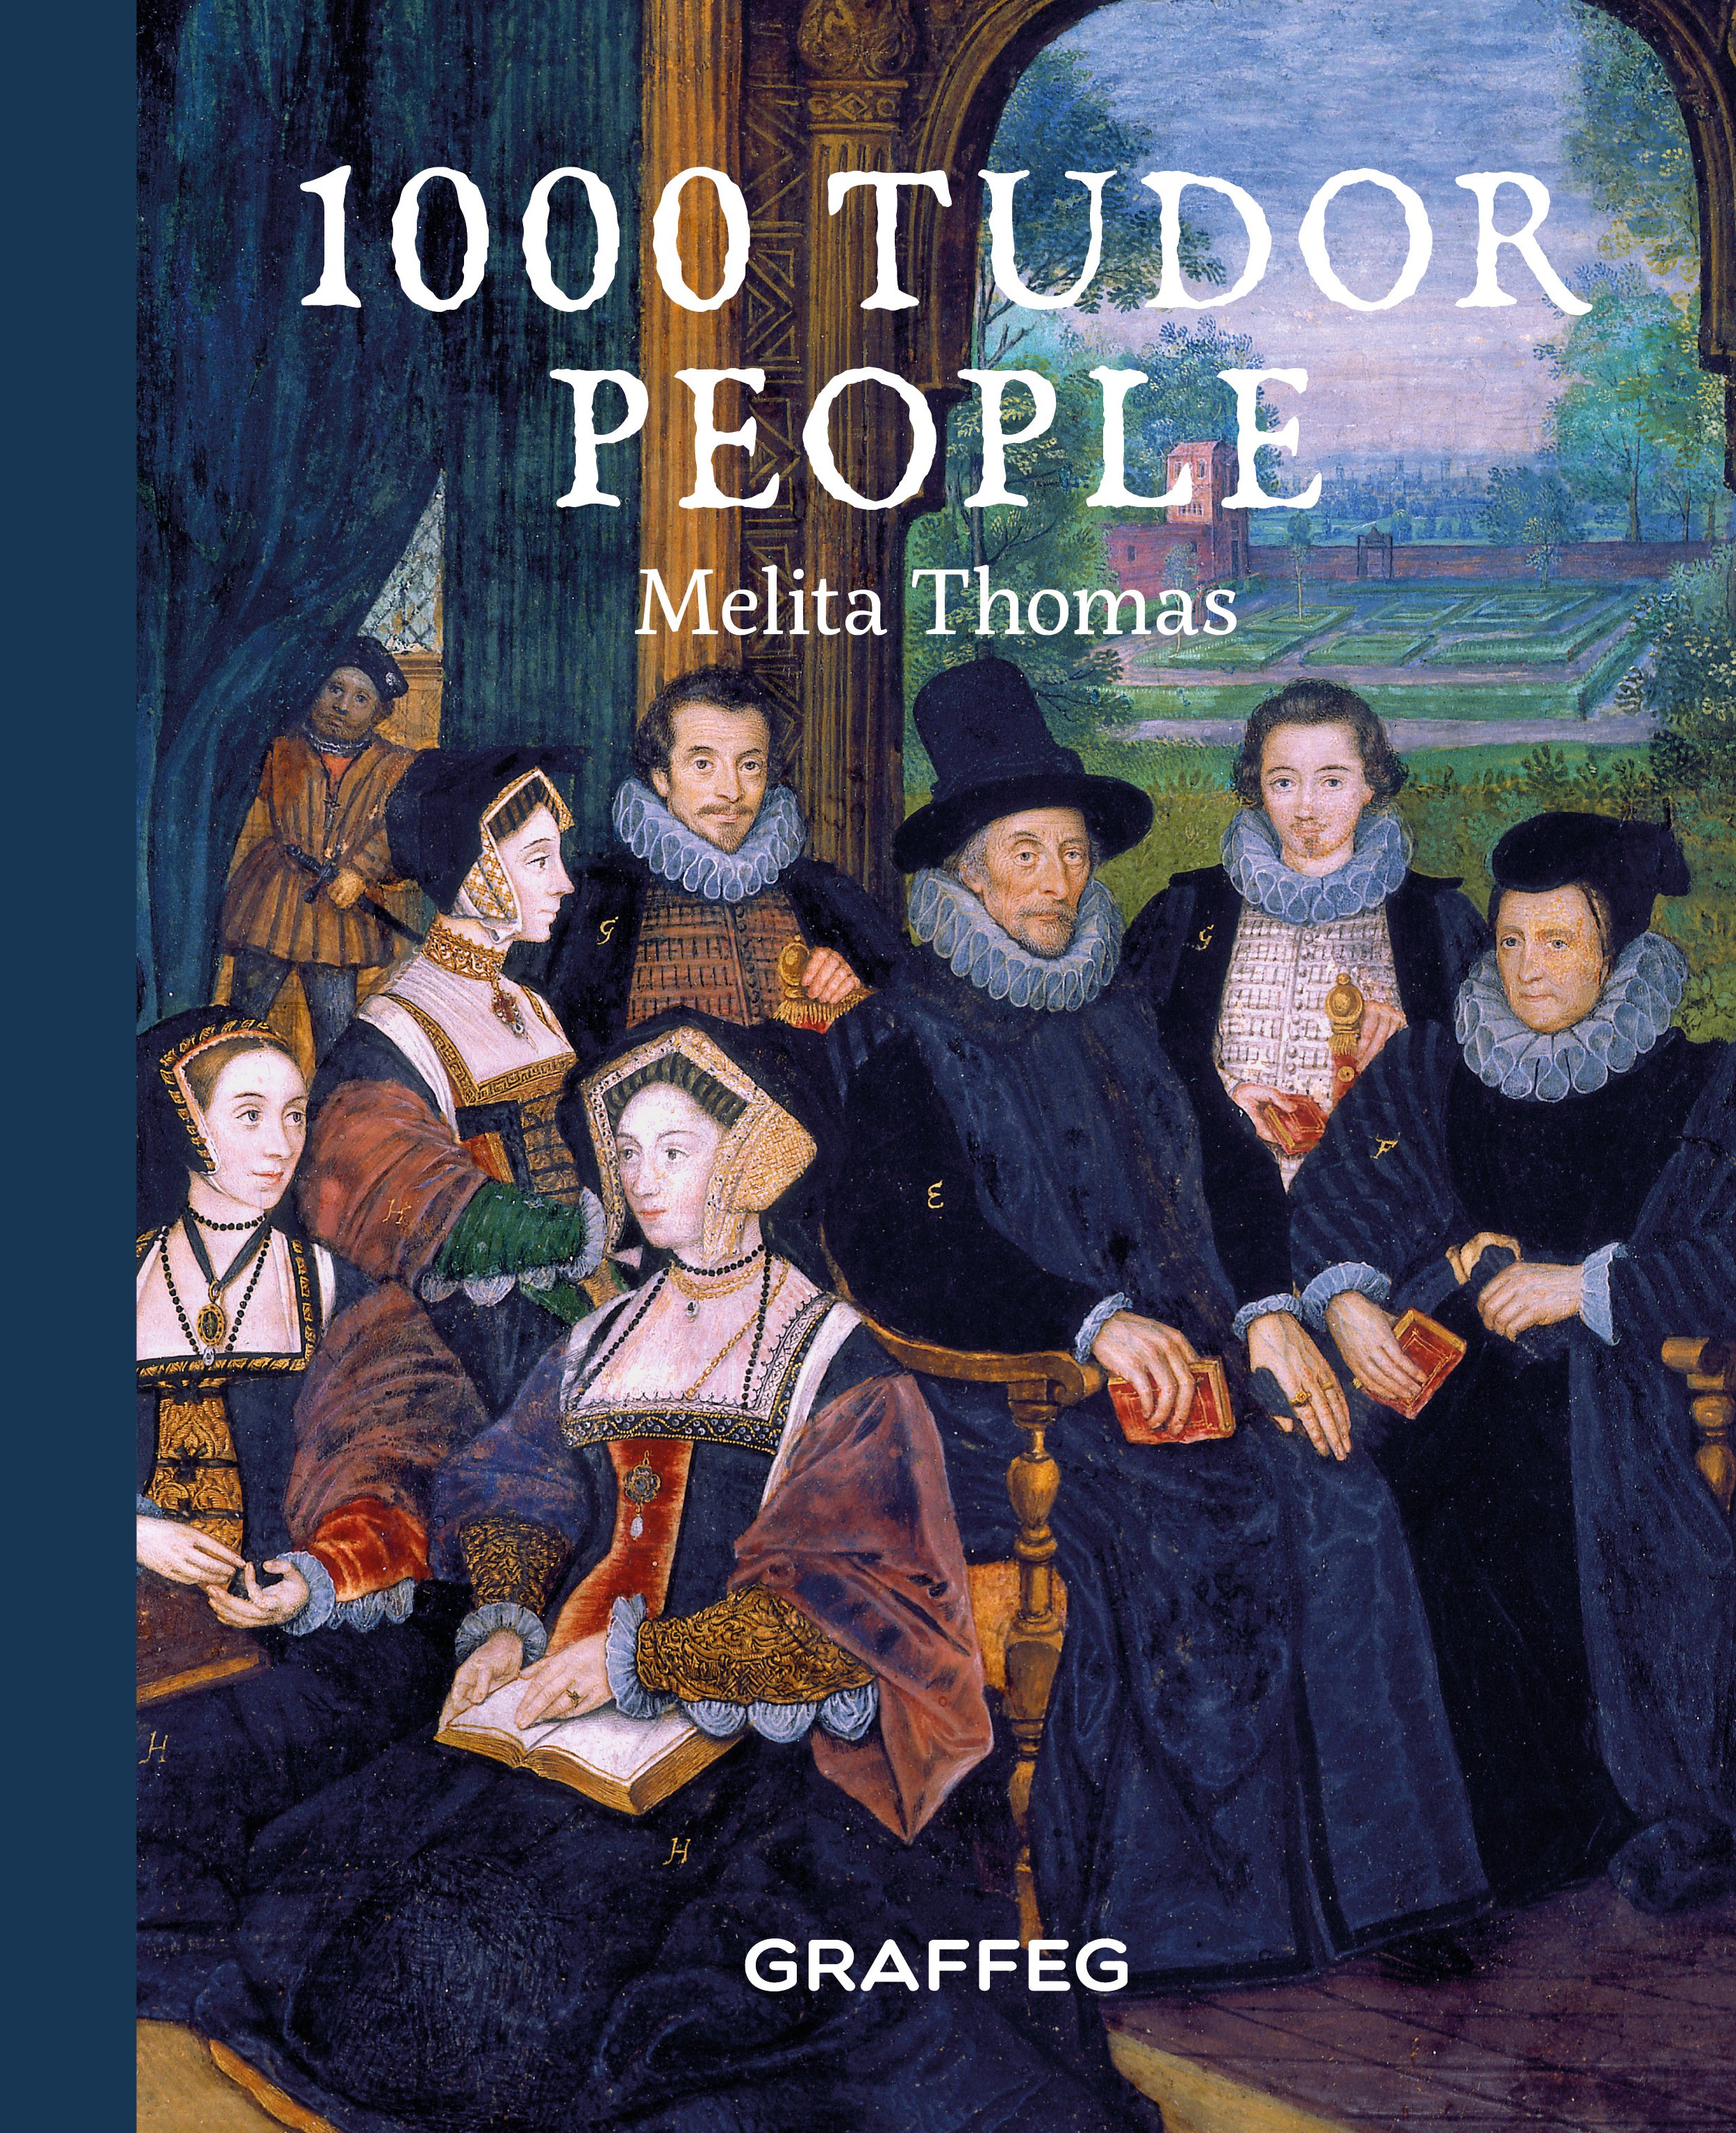 1000 Tudor People COVER final.jpg